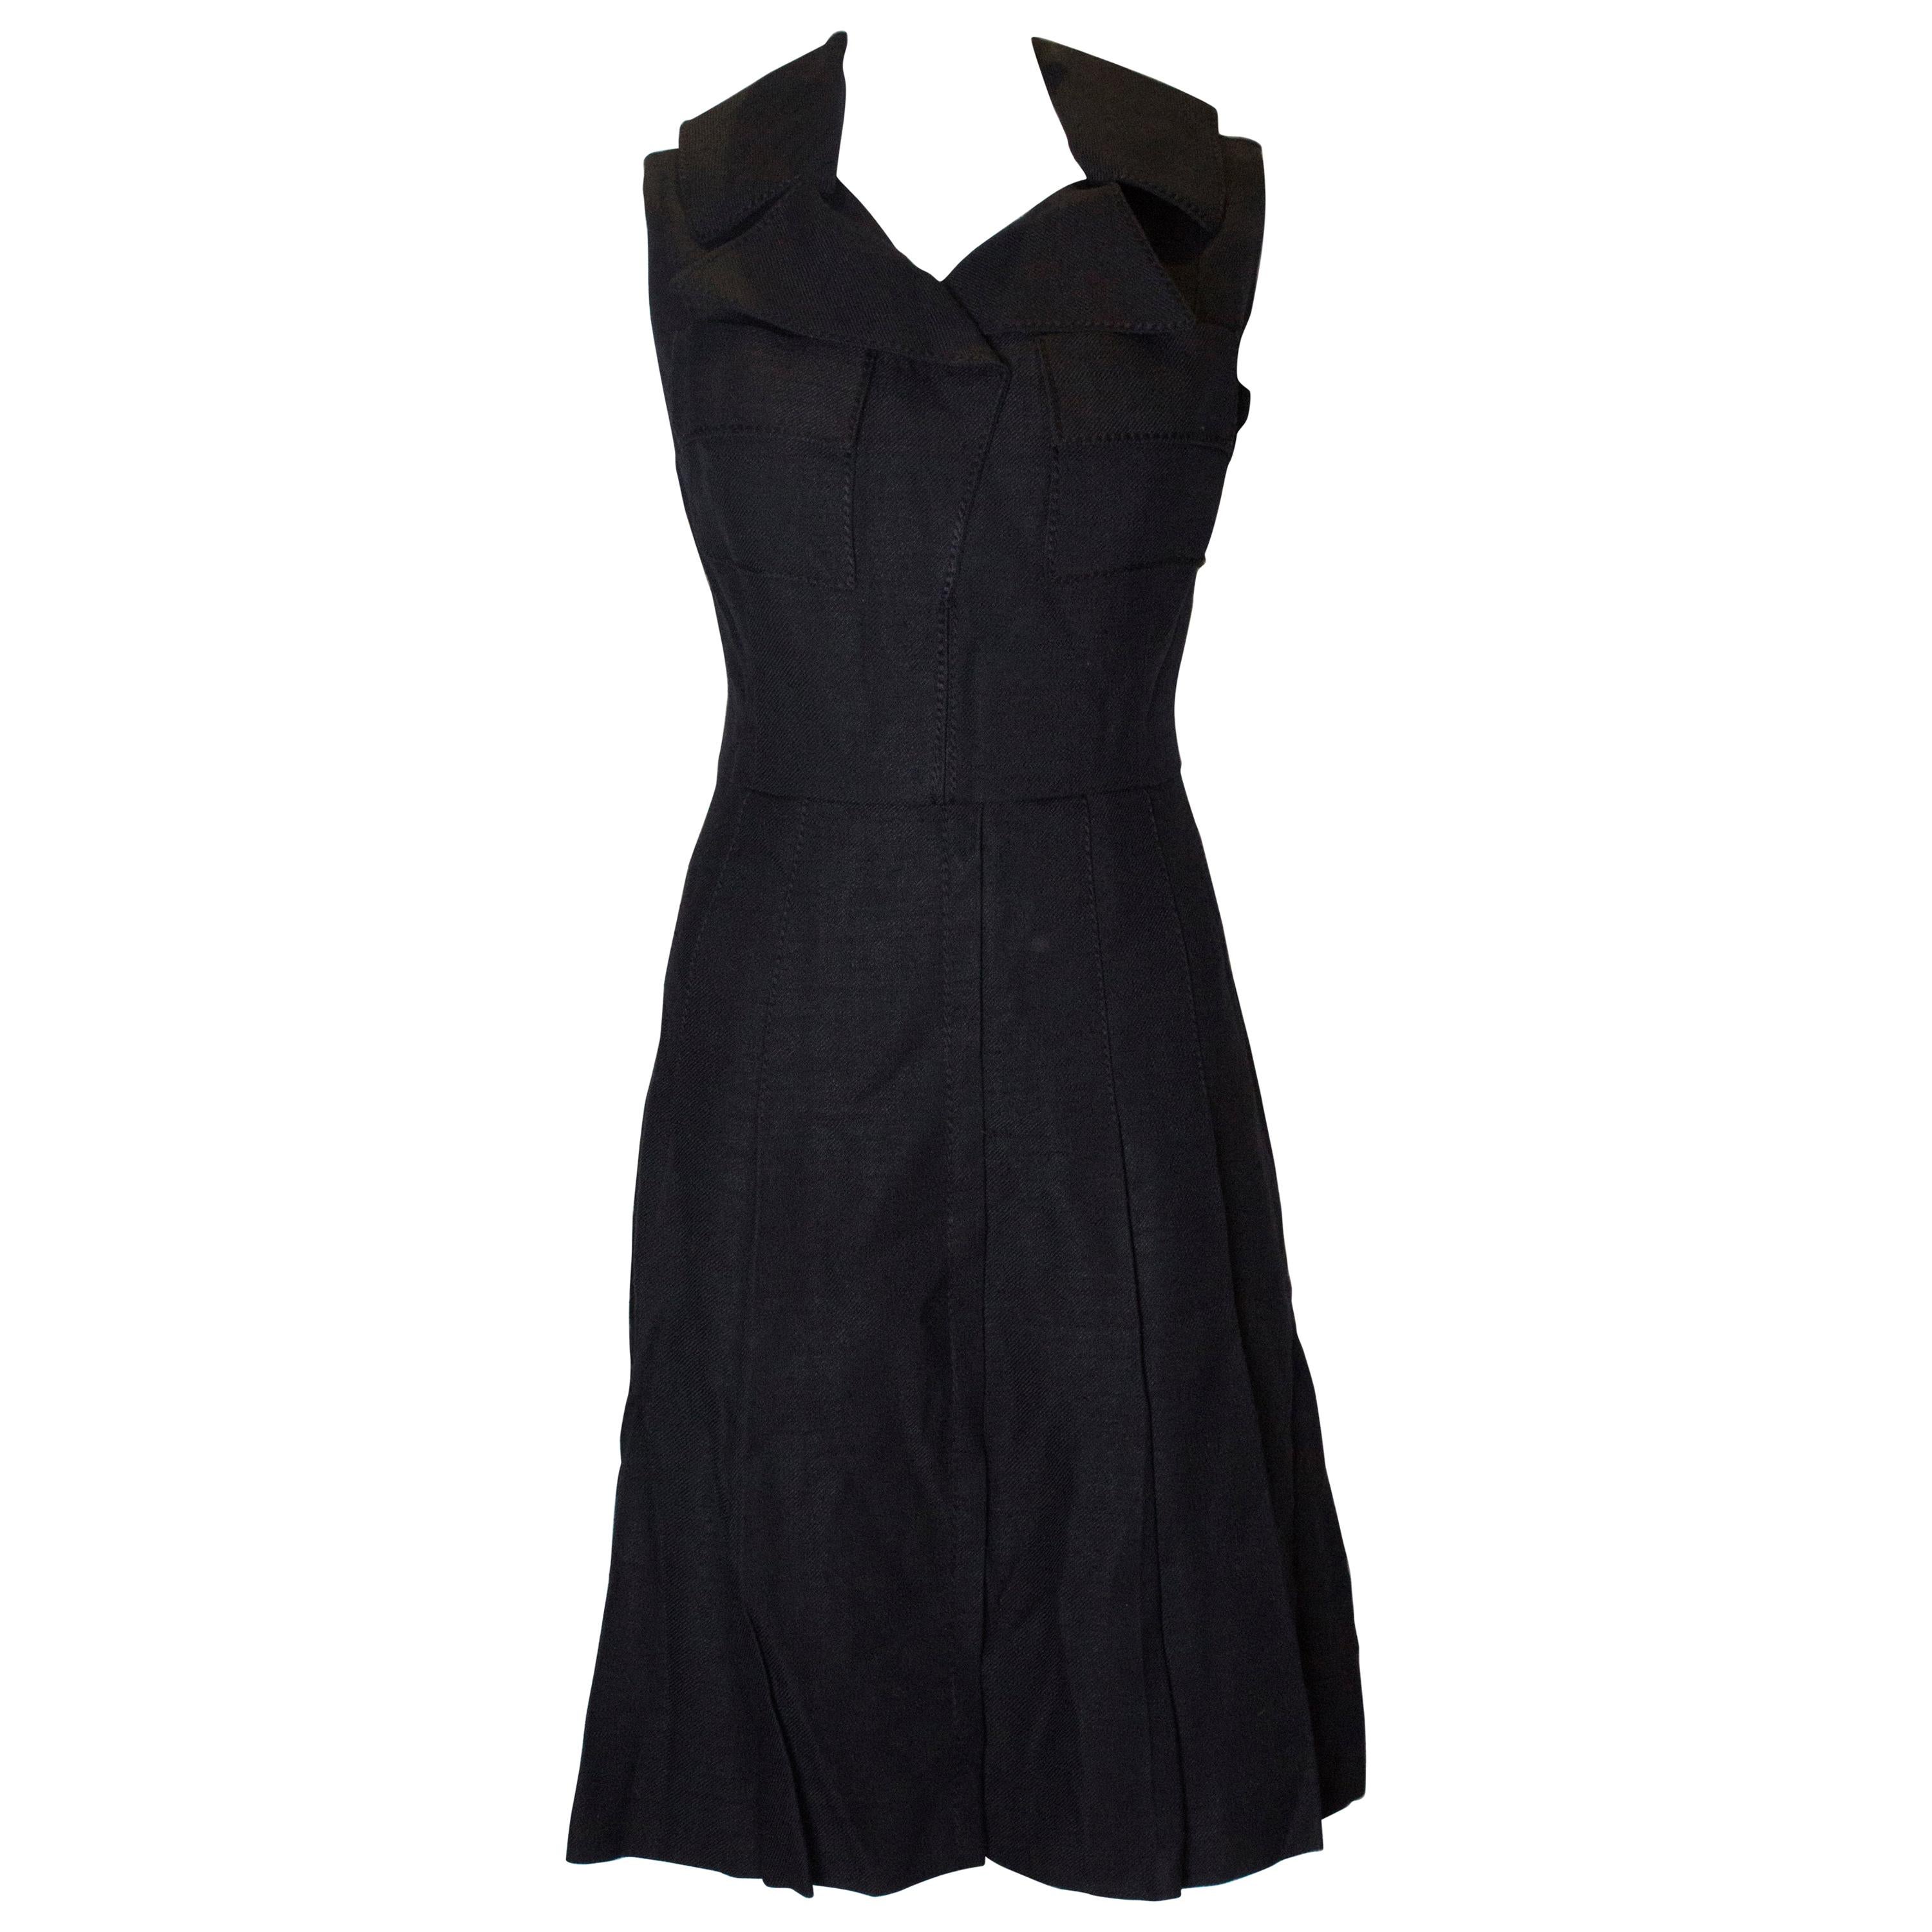 Vintage Black Dress by The Fashion Club London For Sale